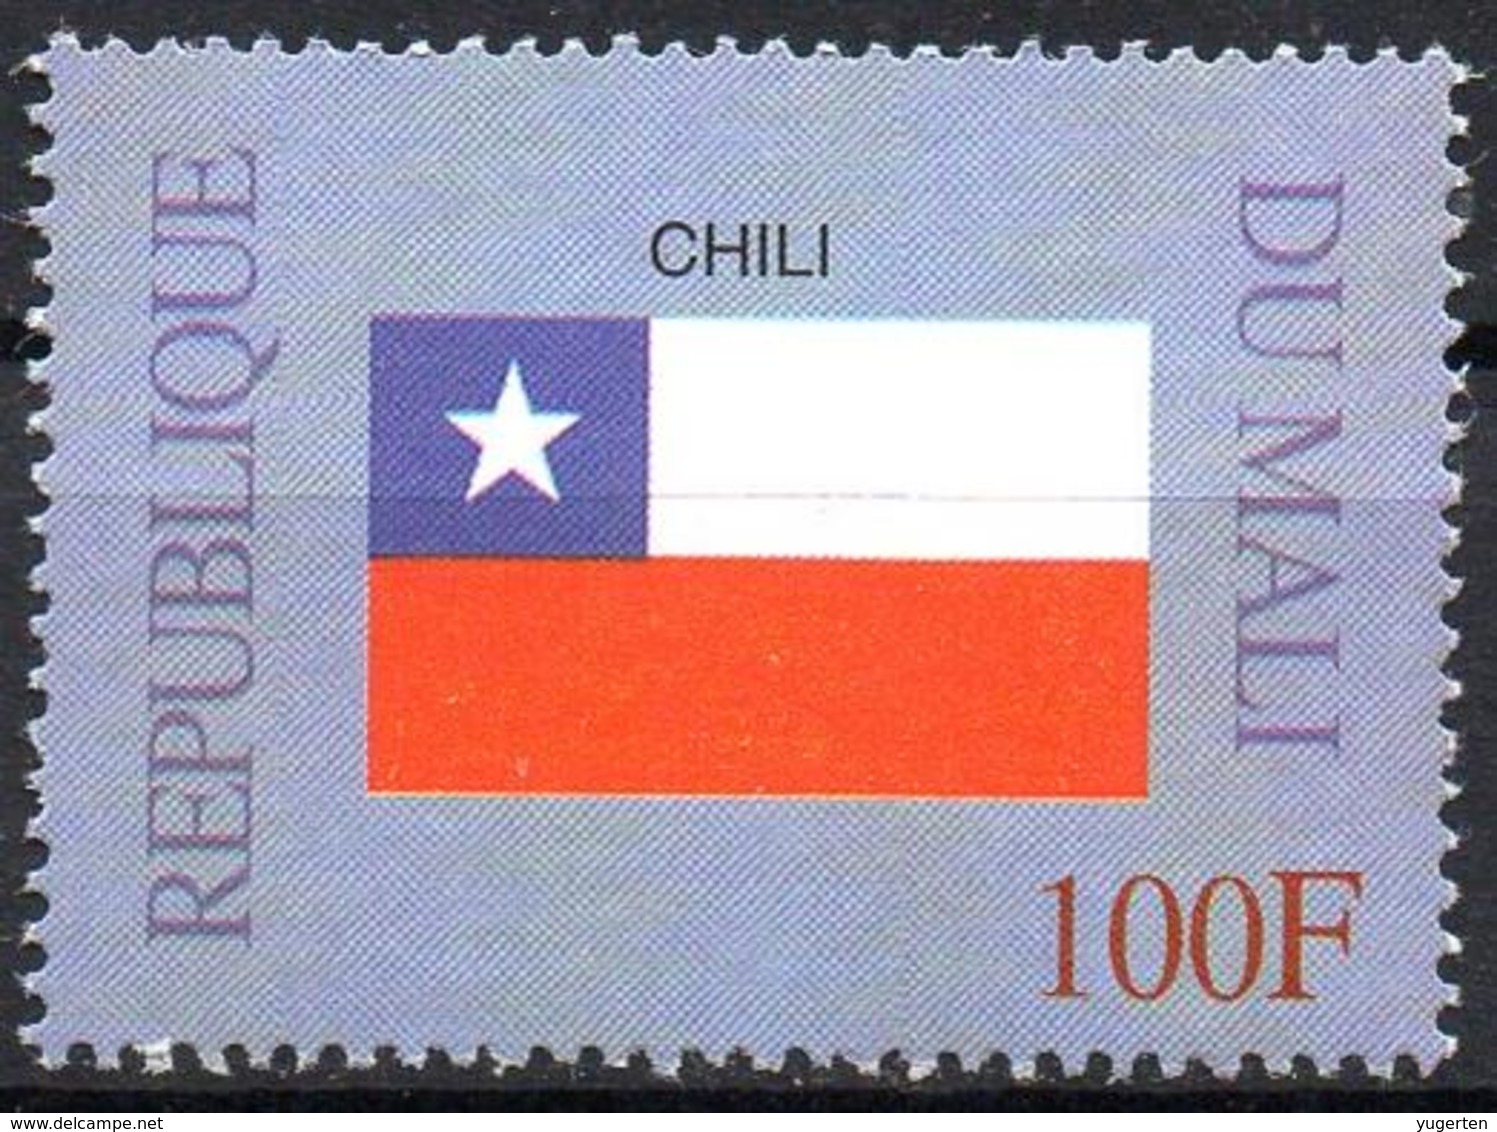 MALI 1999 - 1v - MNH** - Flag Of Chile Chili - Flags Drapeaux Fahnen Bandiere Banderas флаги - Timbres